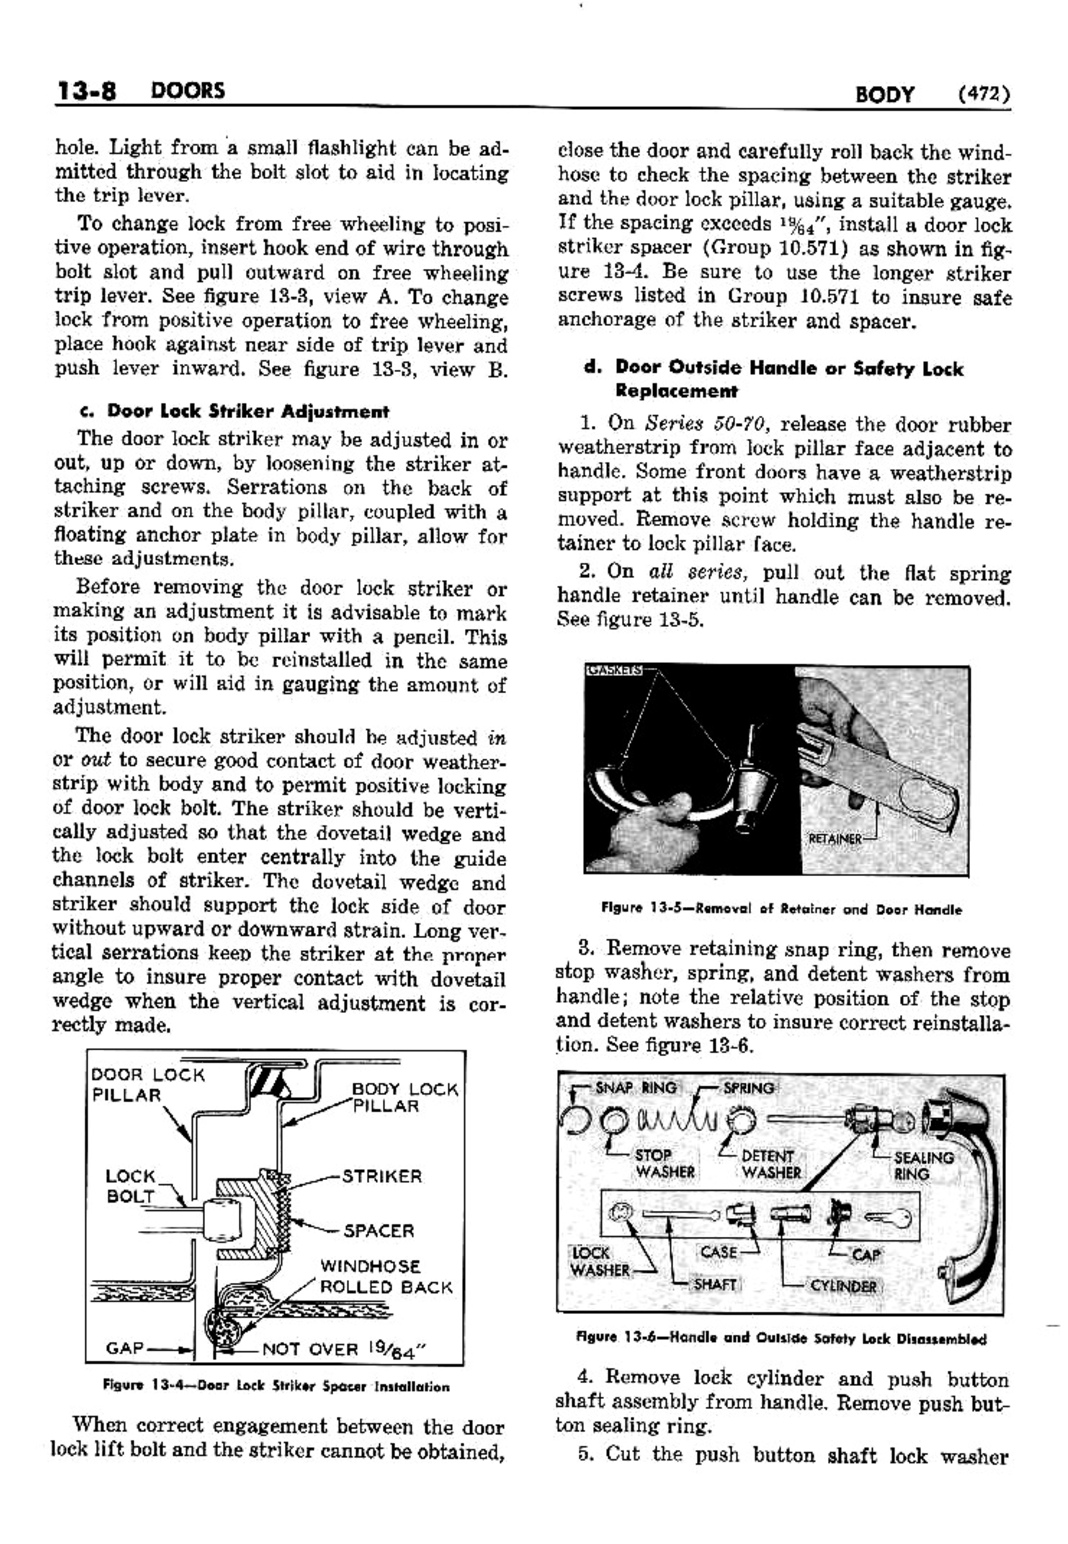 n_14 1952 Buick Shop Manual - Body-008-008.jpg